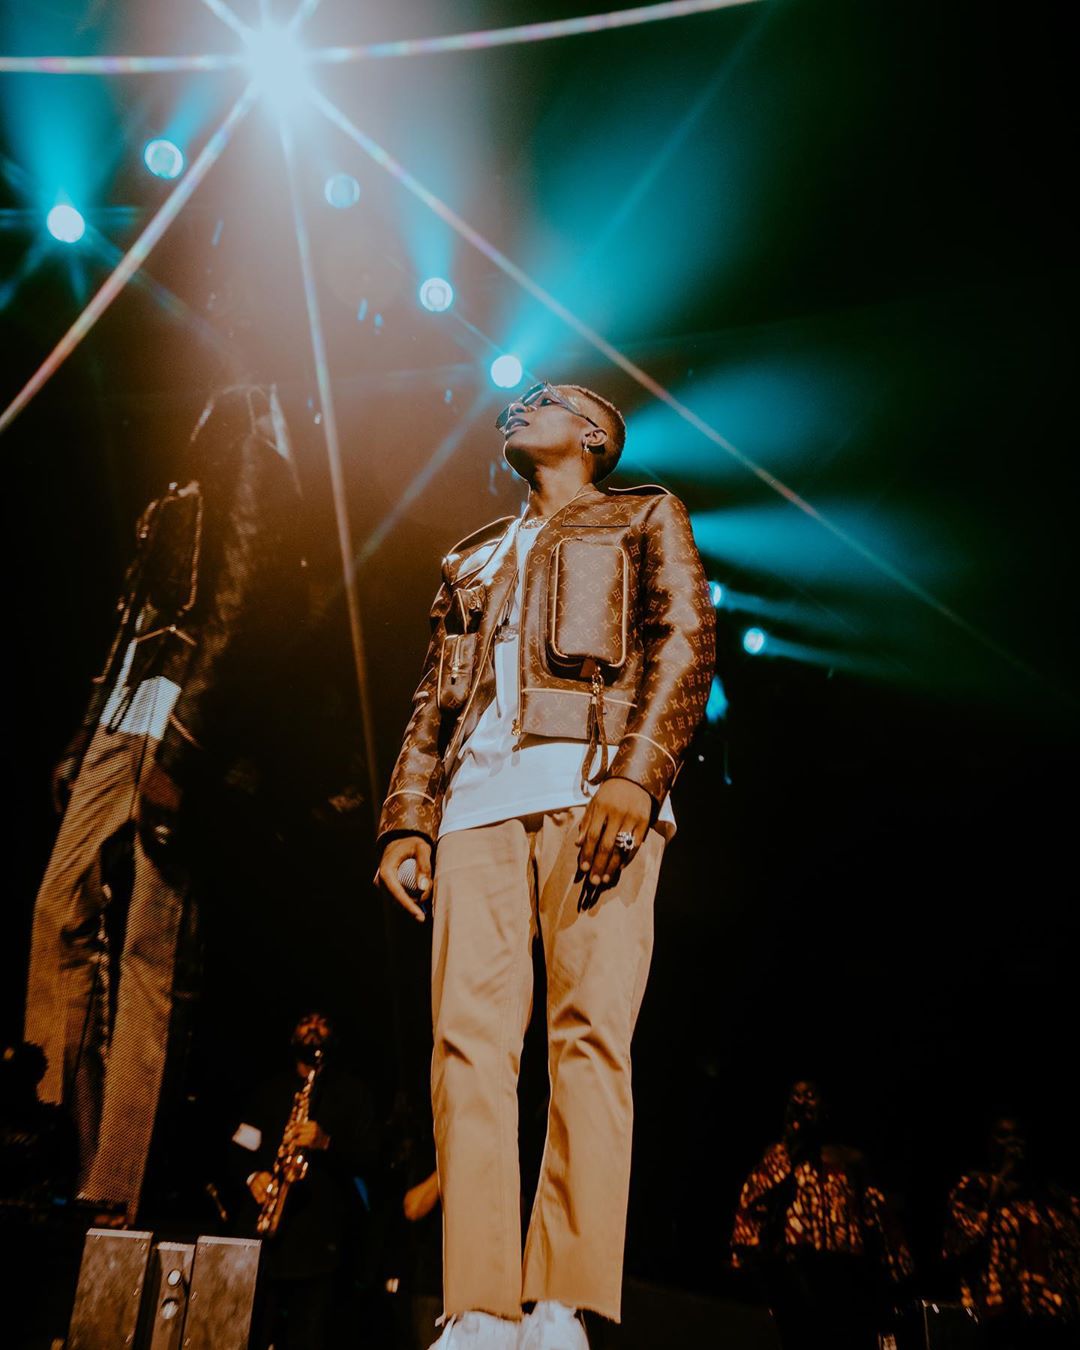 Wizkid Wears Louis Vuitton Rubber Utility Gilet Jacket Worth 1million Naira  - Celebrities - Nigeria